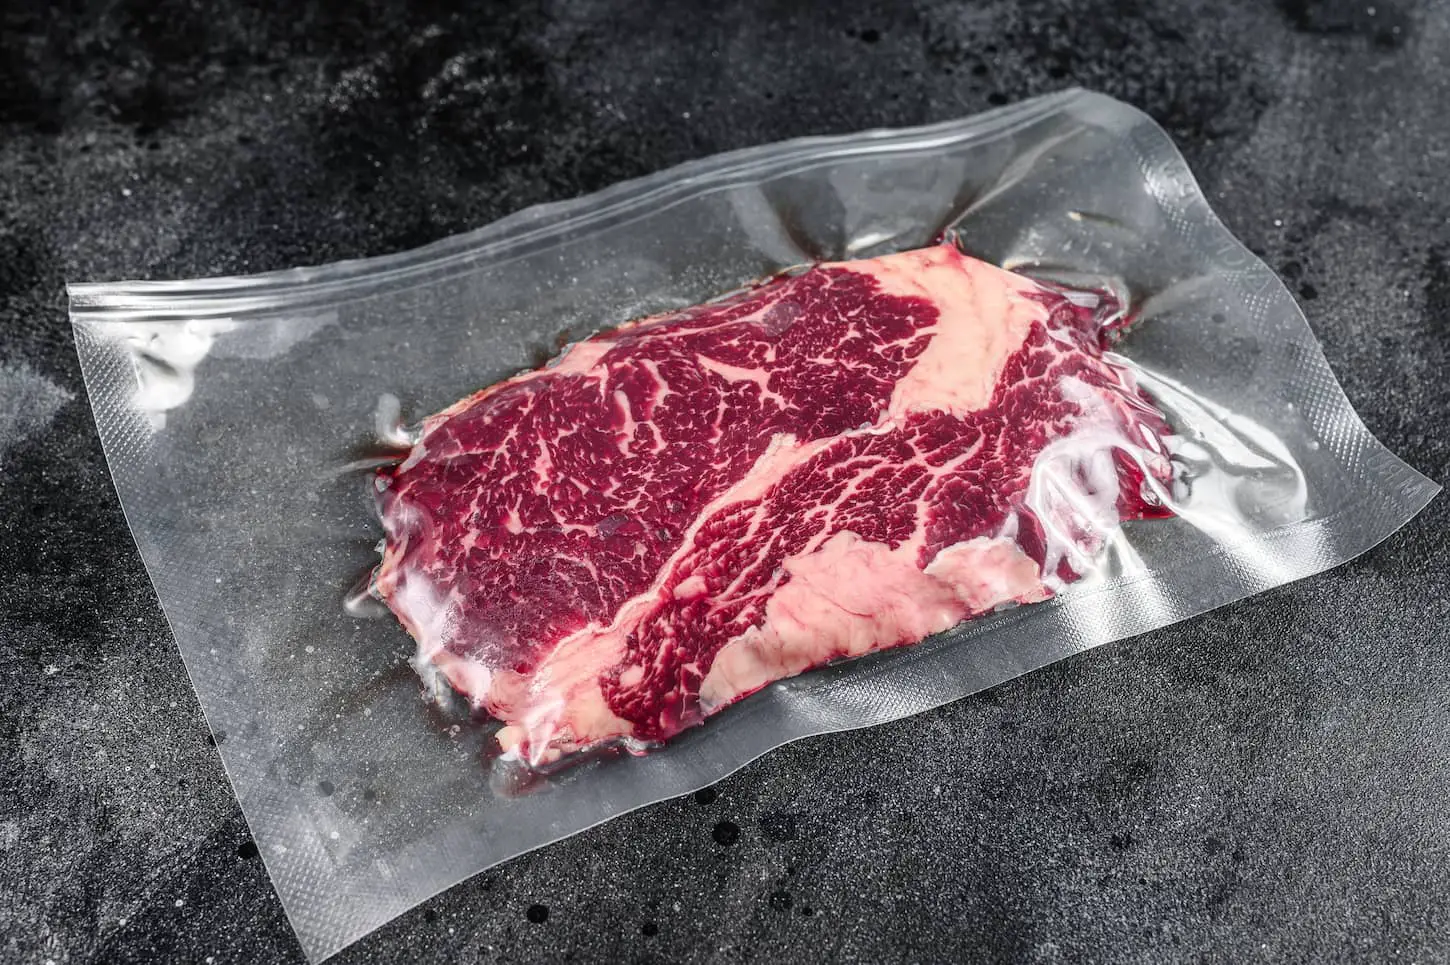 An image of raw rib-eye beef meat steak in vacuum packaging with black background.